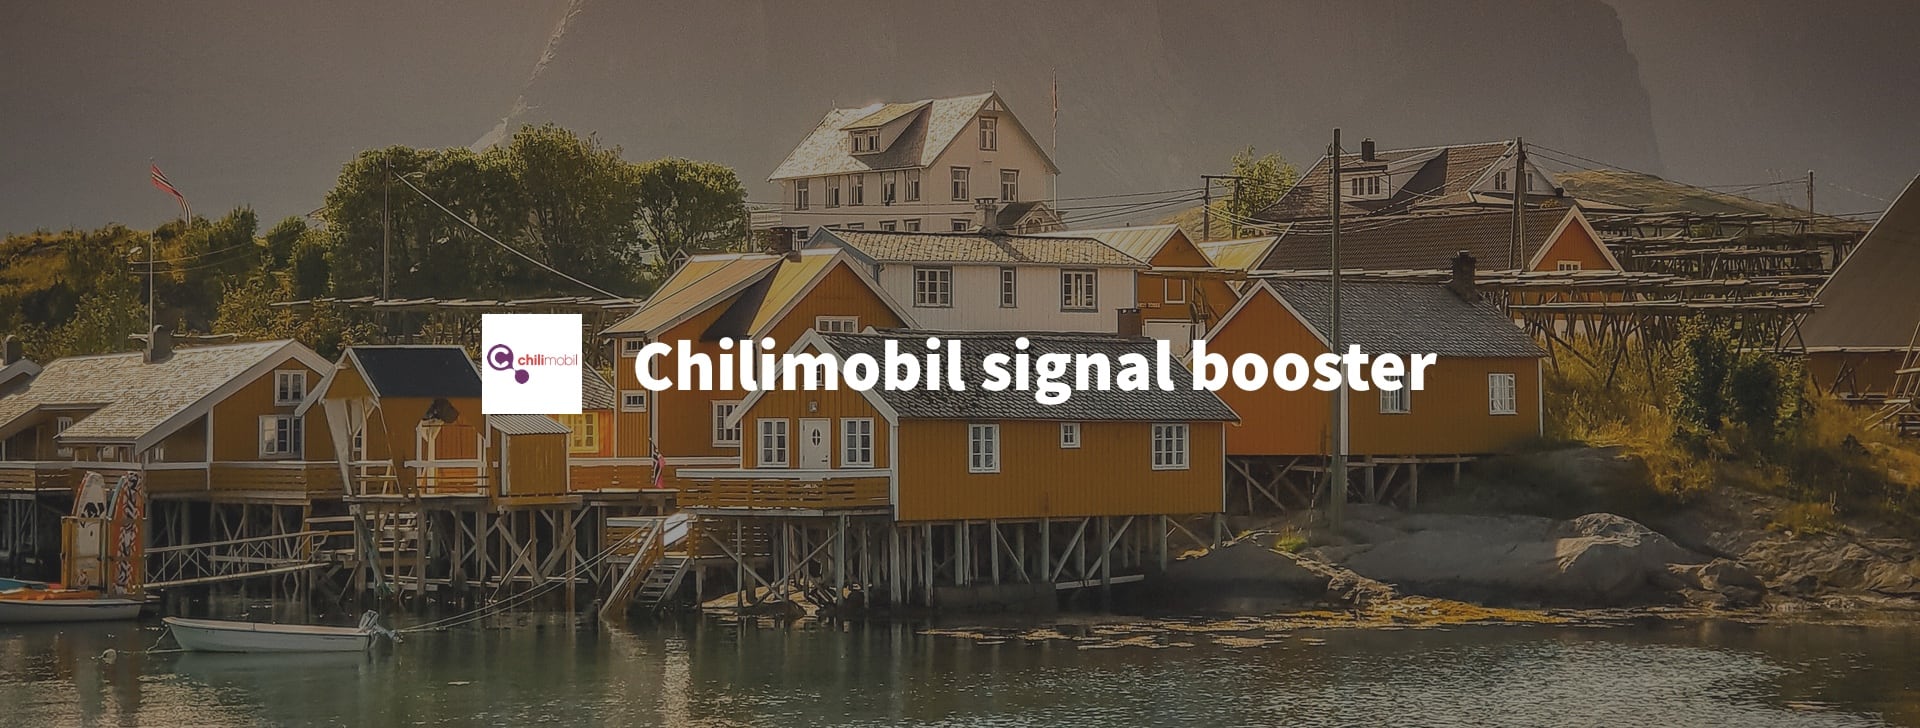 Chilimobil mobile signal